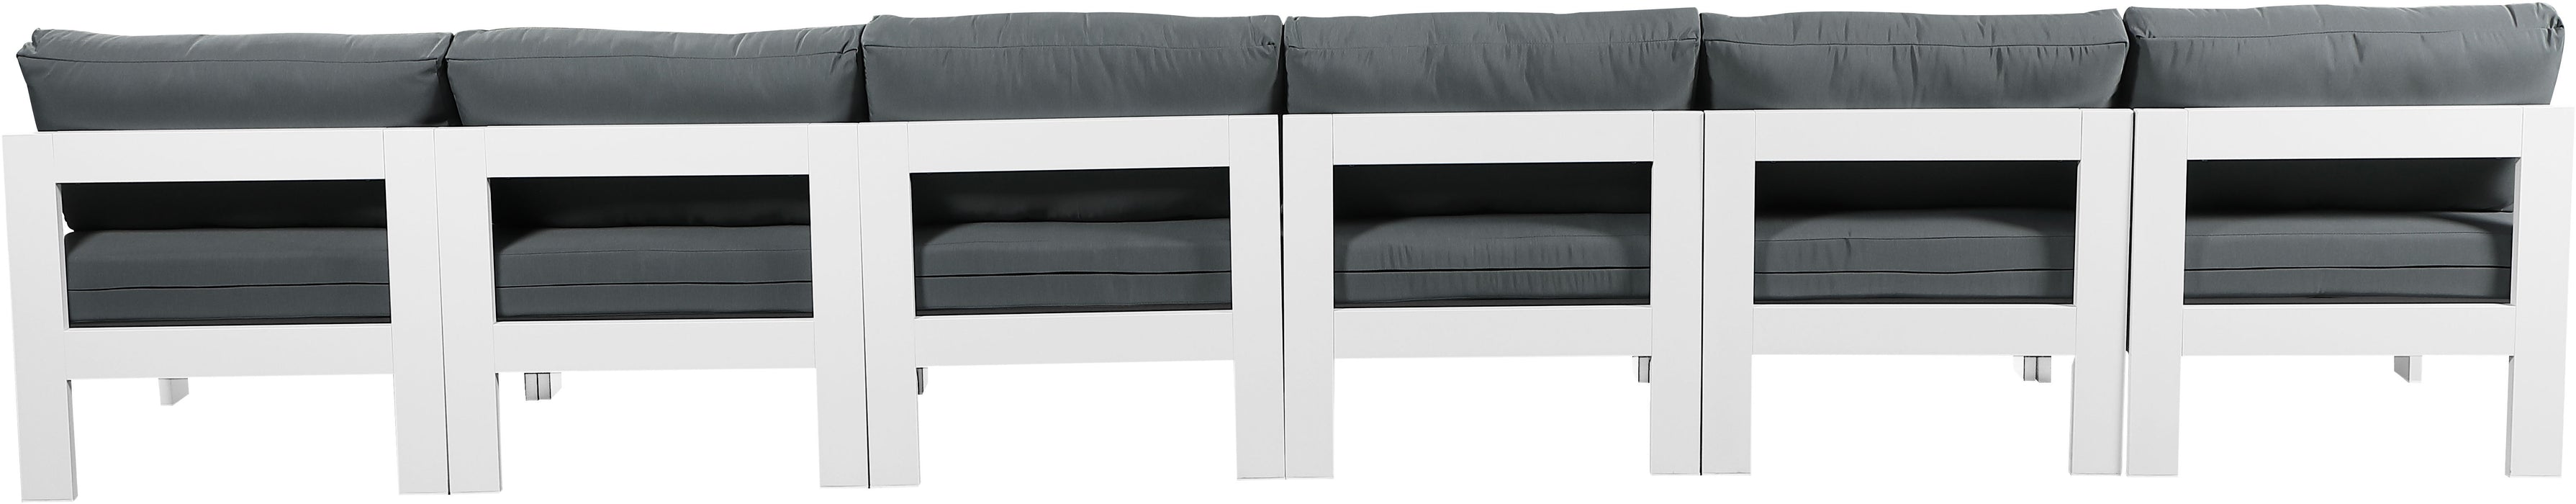 Nizuc - Outdoor Patio Modular Sofa Armless 6 Seats - Grey